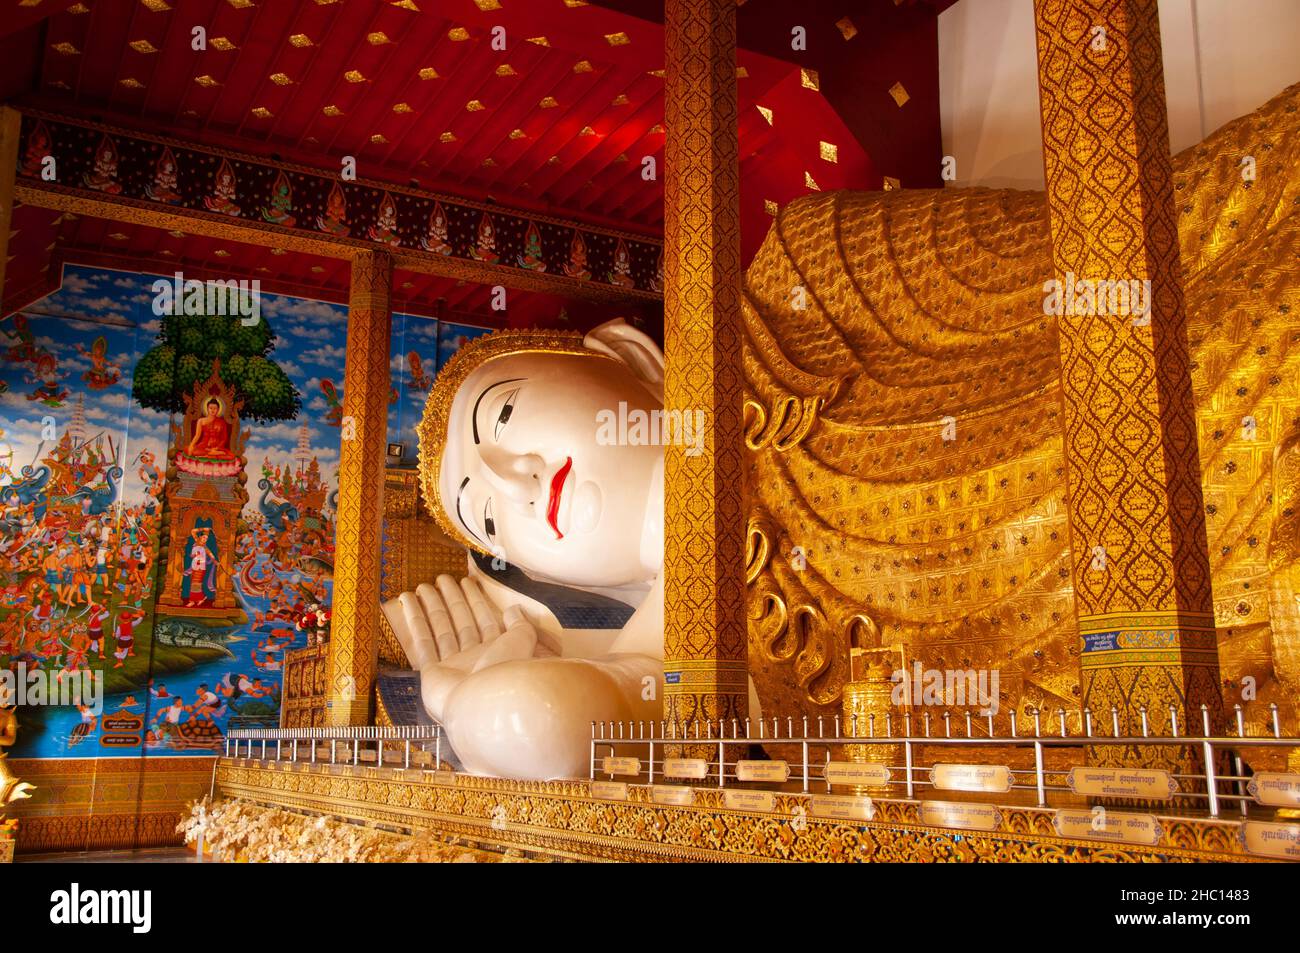 Thailand: Liegender Buddha, Wat Ban Den, Ban Inthakin, Bezirk Mae Taeng, Chiang Mai. Wat Ban Den, auch bekannt als Wat Bandensali Si Mueang Kaen, ist ein großer buddhistischer Tempelkomplex nördlich der Stadt Chiang Mai im Norden Thailands. Stockfoto